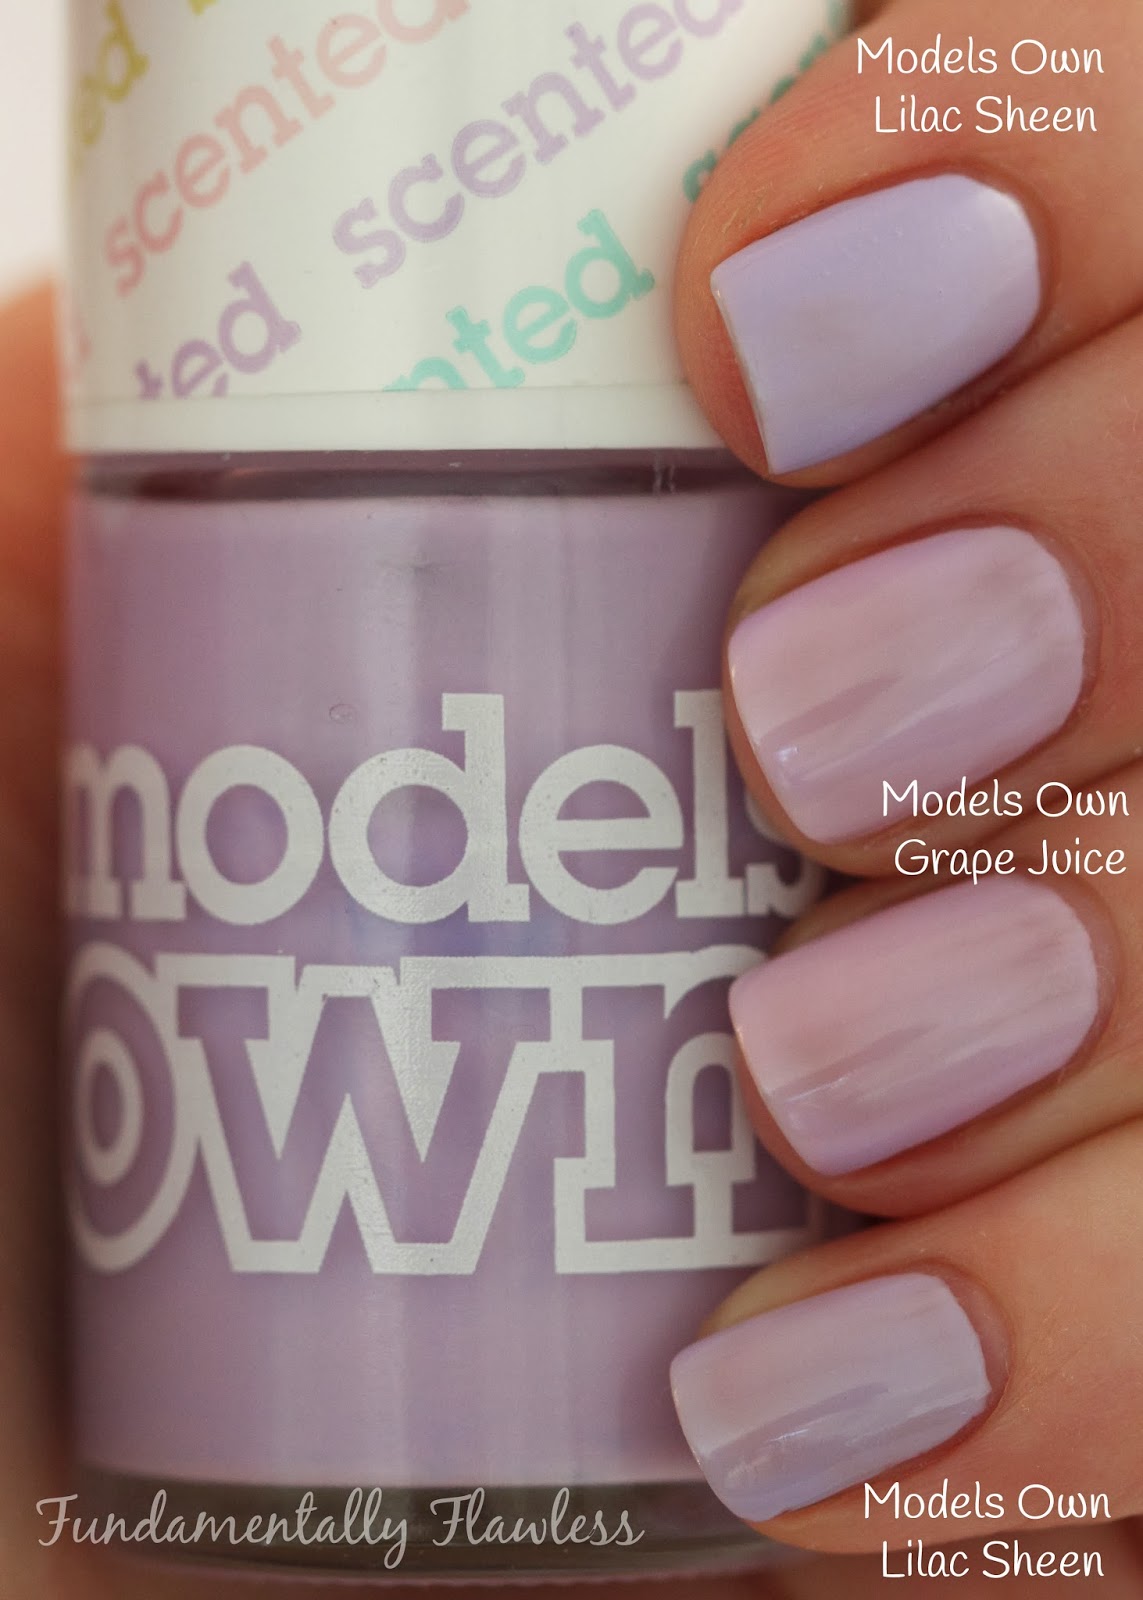 Models Own HyperGel Lilac Sheen vs Models Own Fruit Pastels Grape Juice comparison